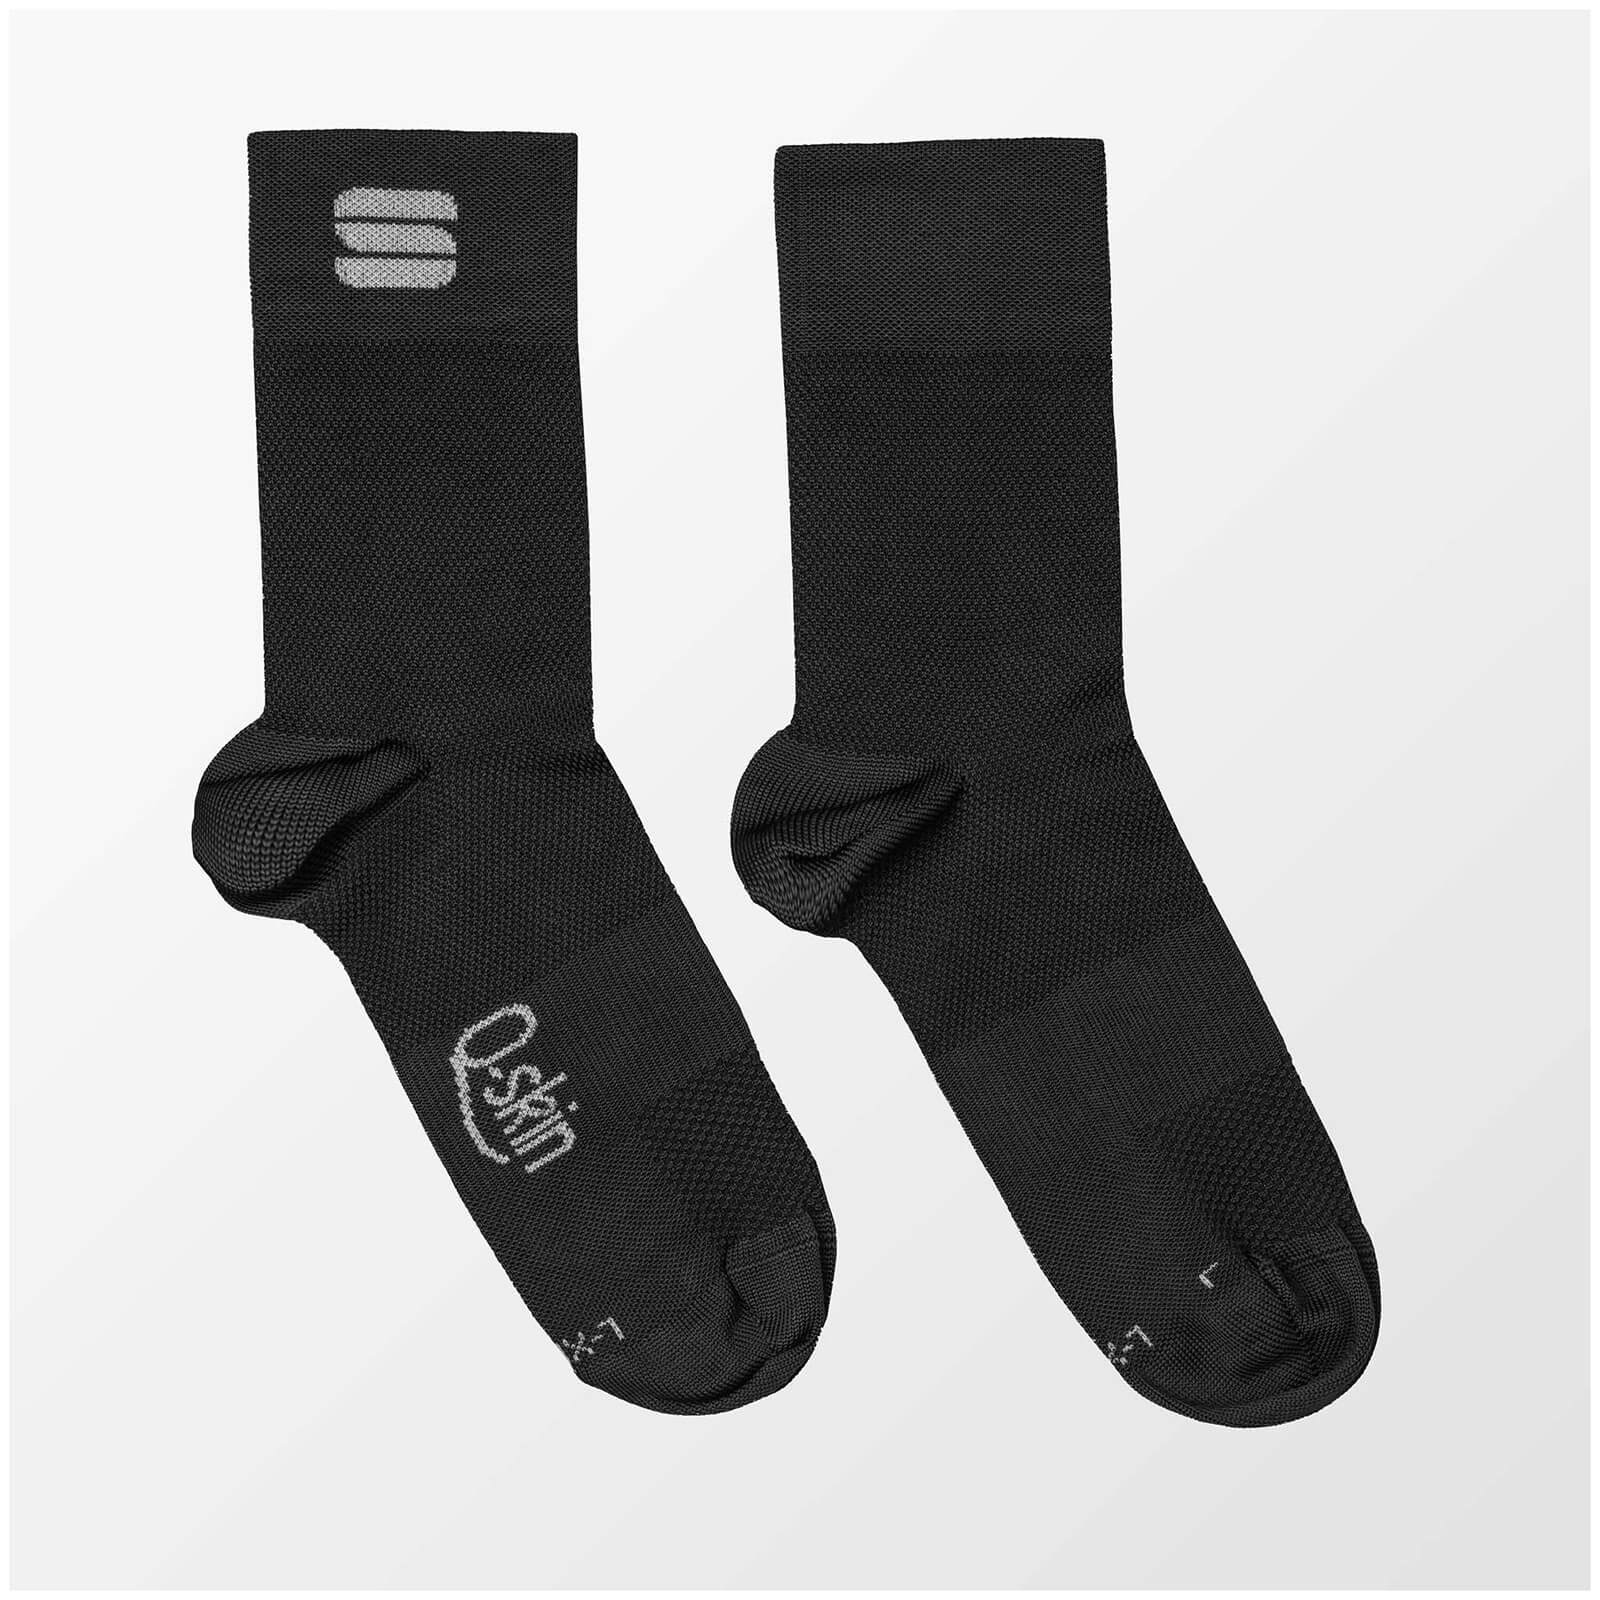 Sportful Women's Matchy Socks - L/XL